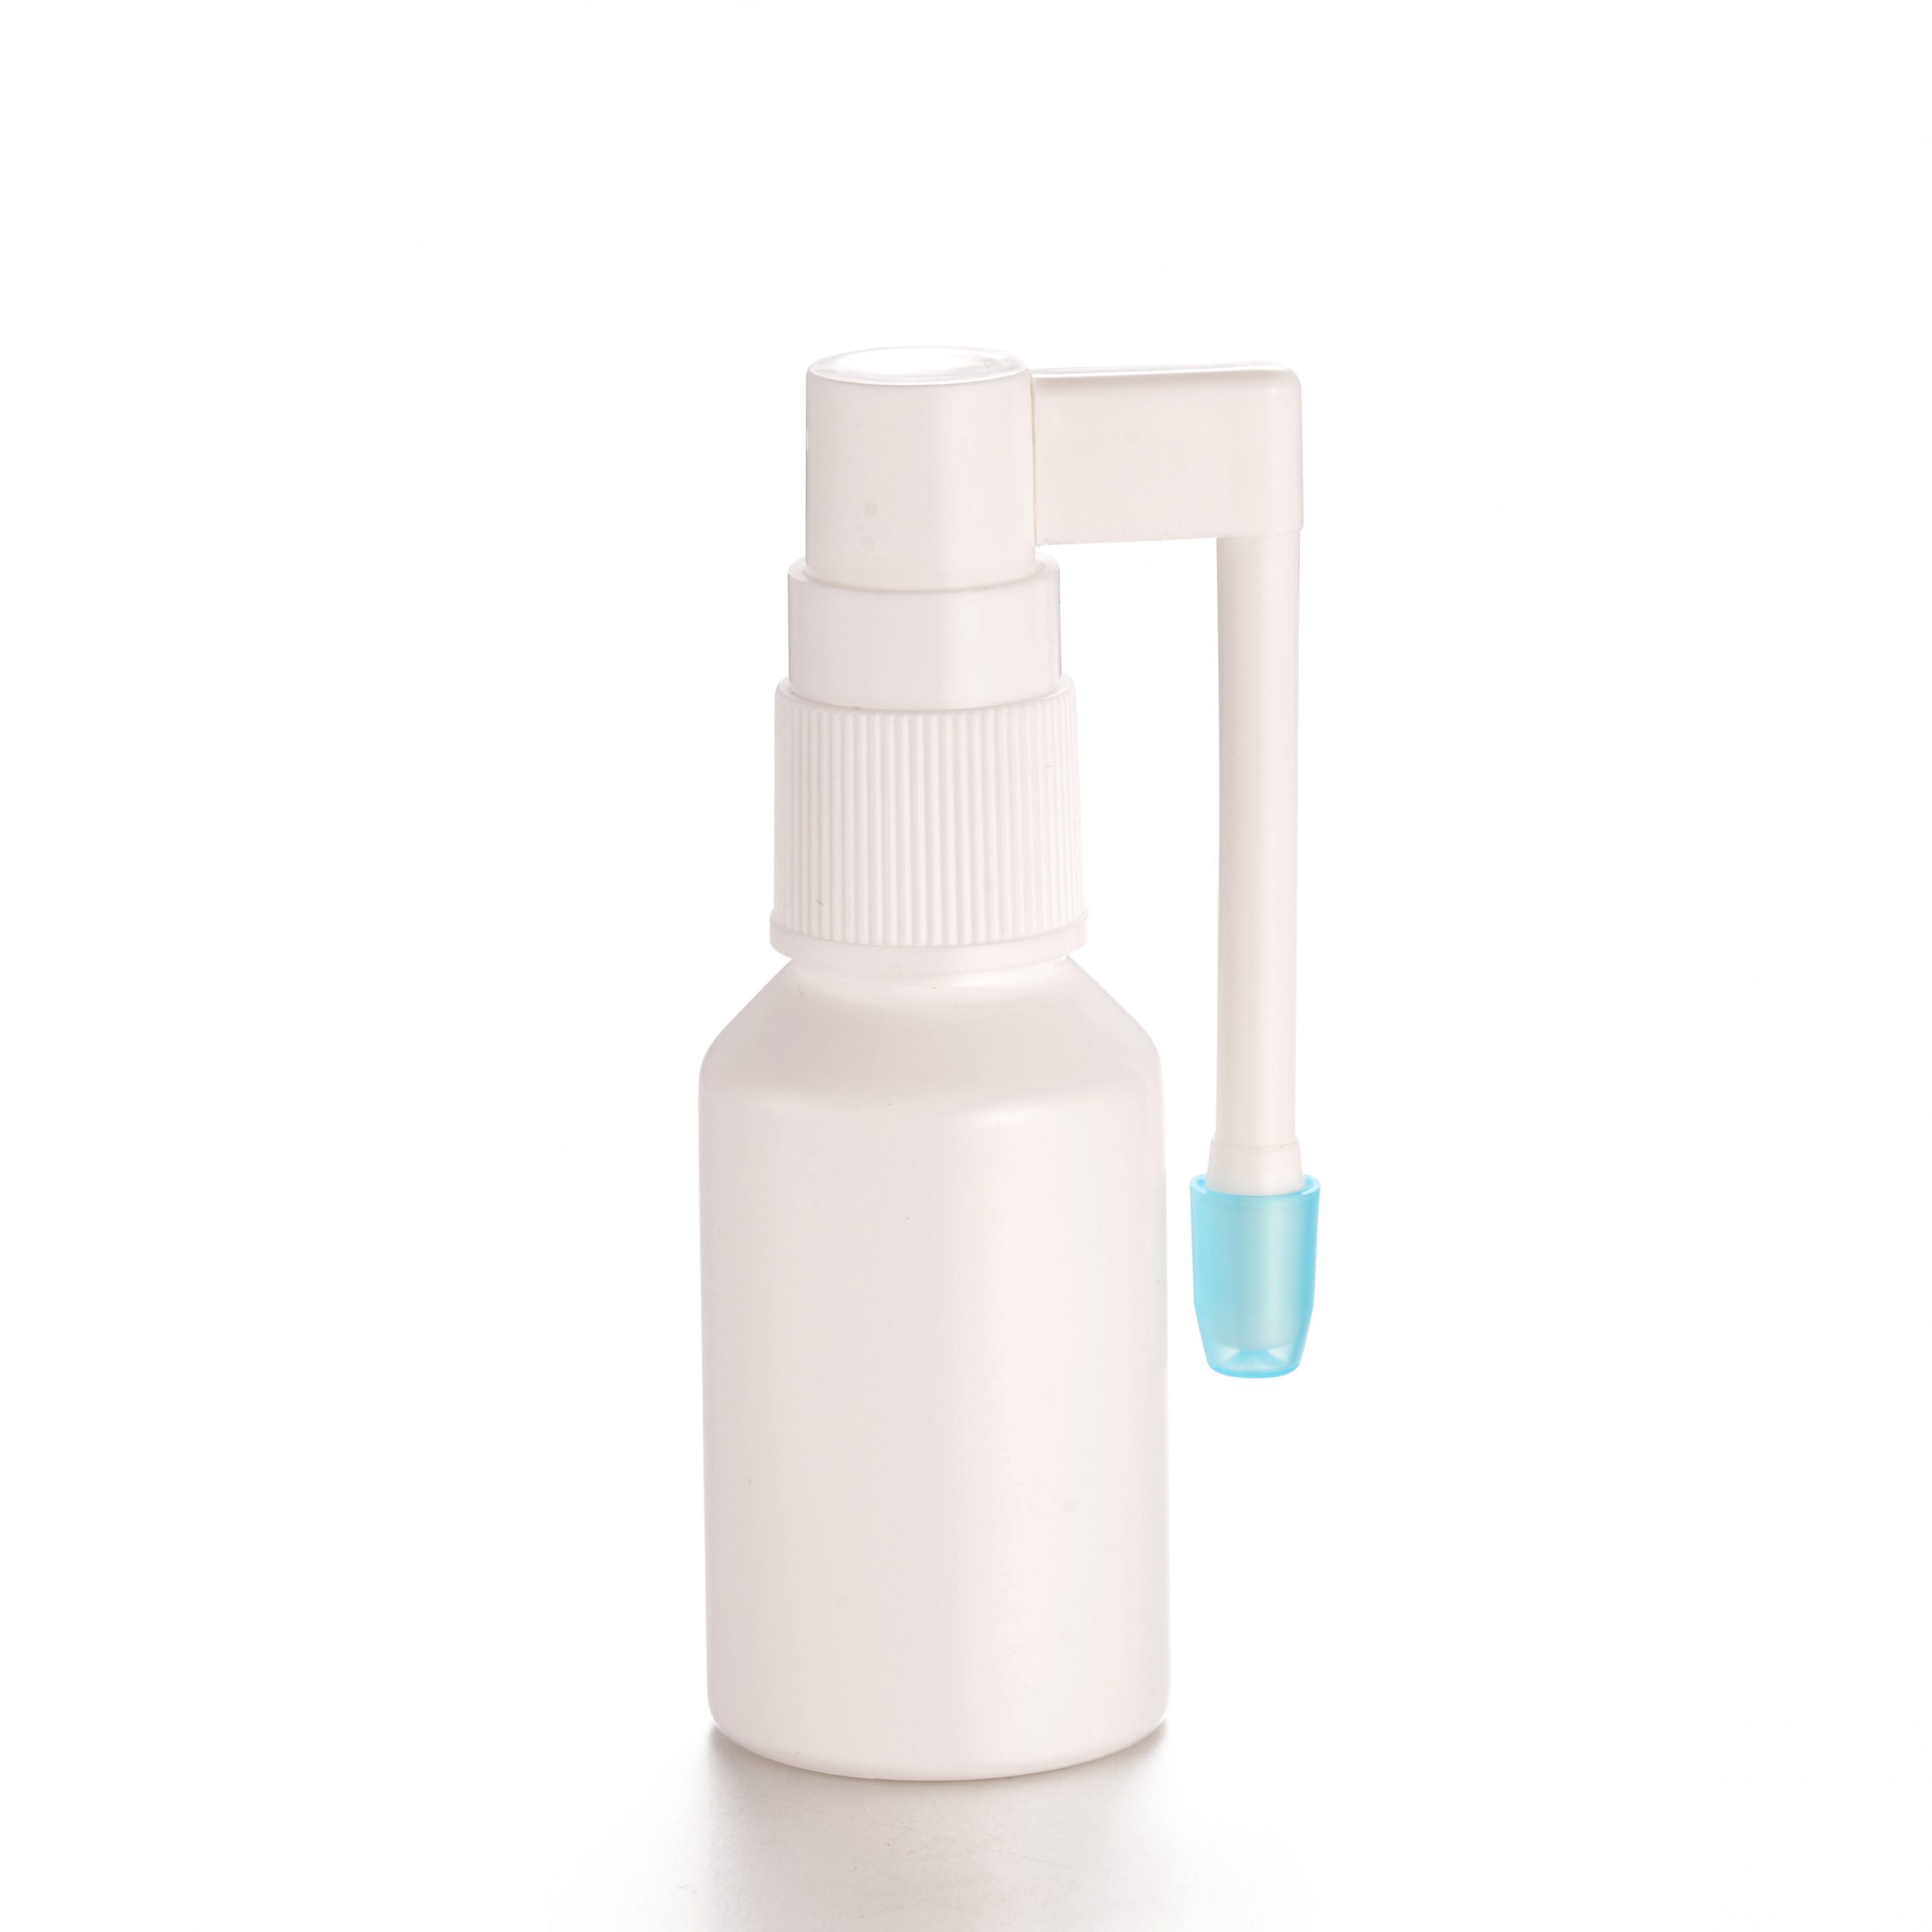 Multi-dose spray pump for health applications